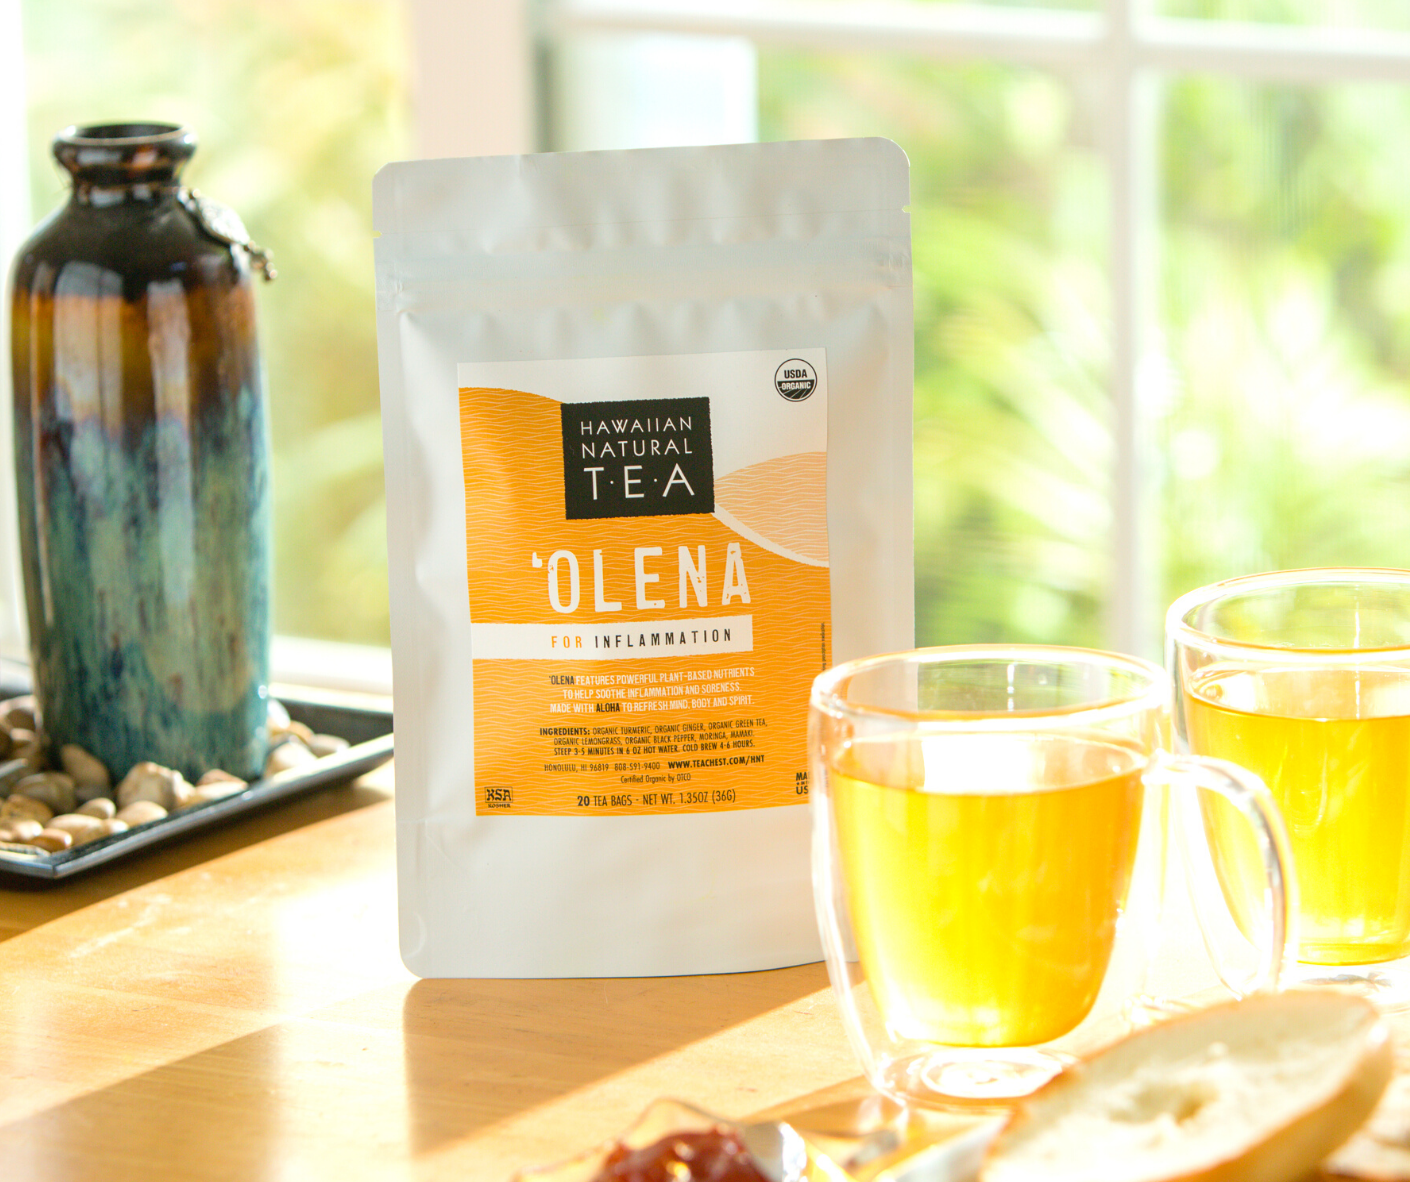  ‘Olena tea    Photo courtesy Tea Chest Hawaii  